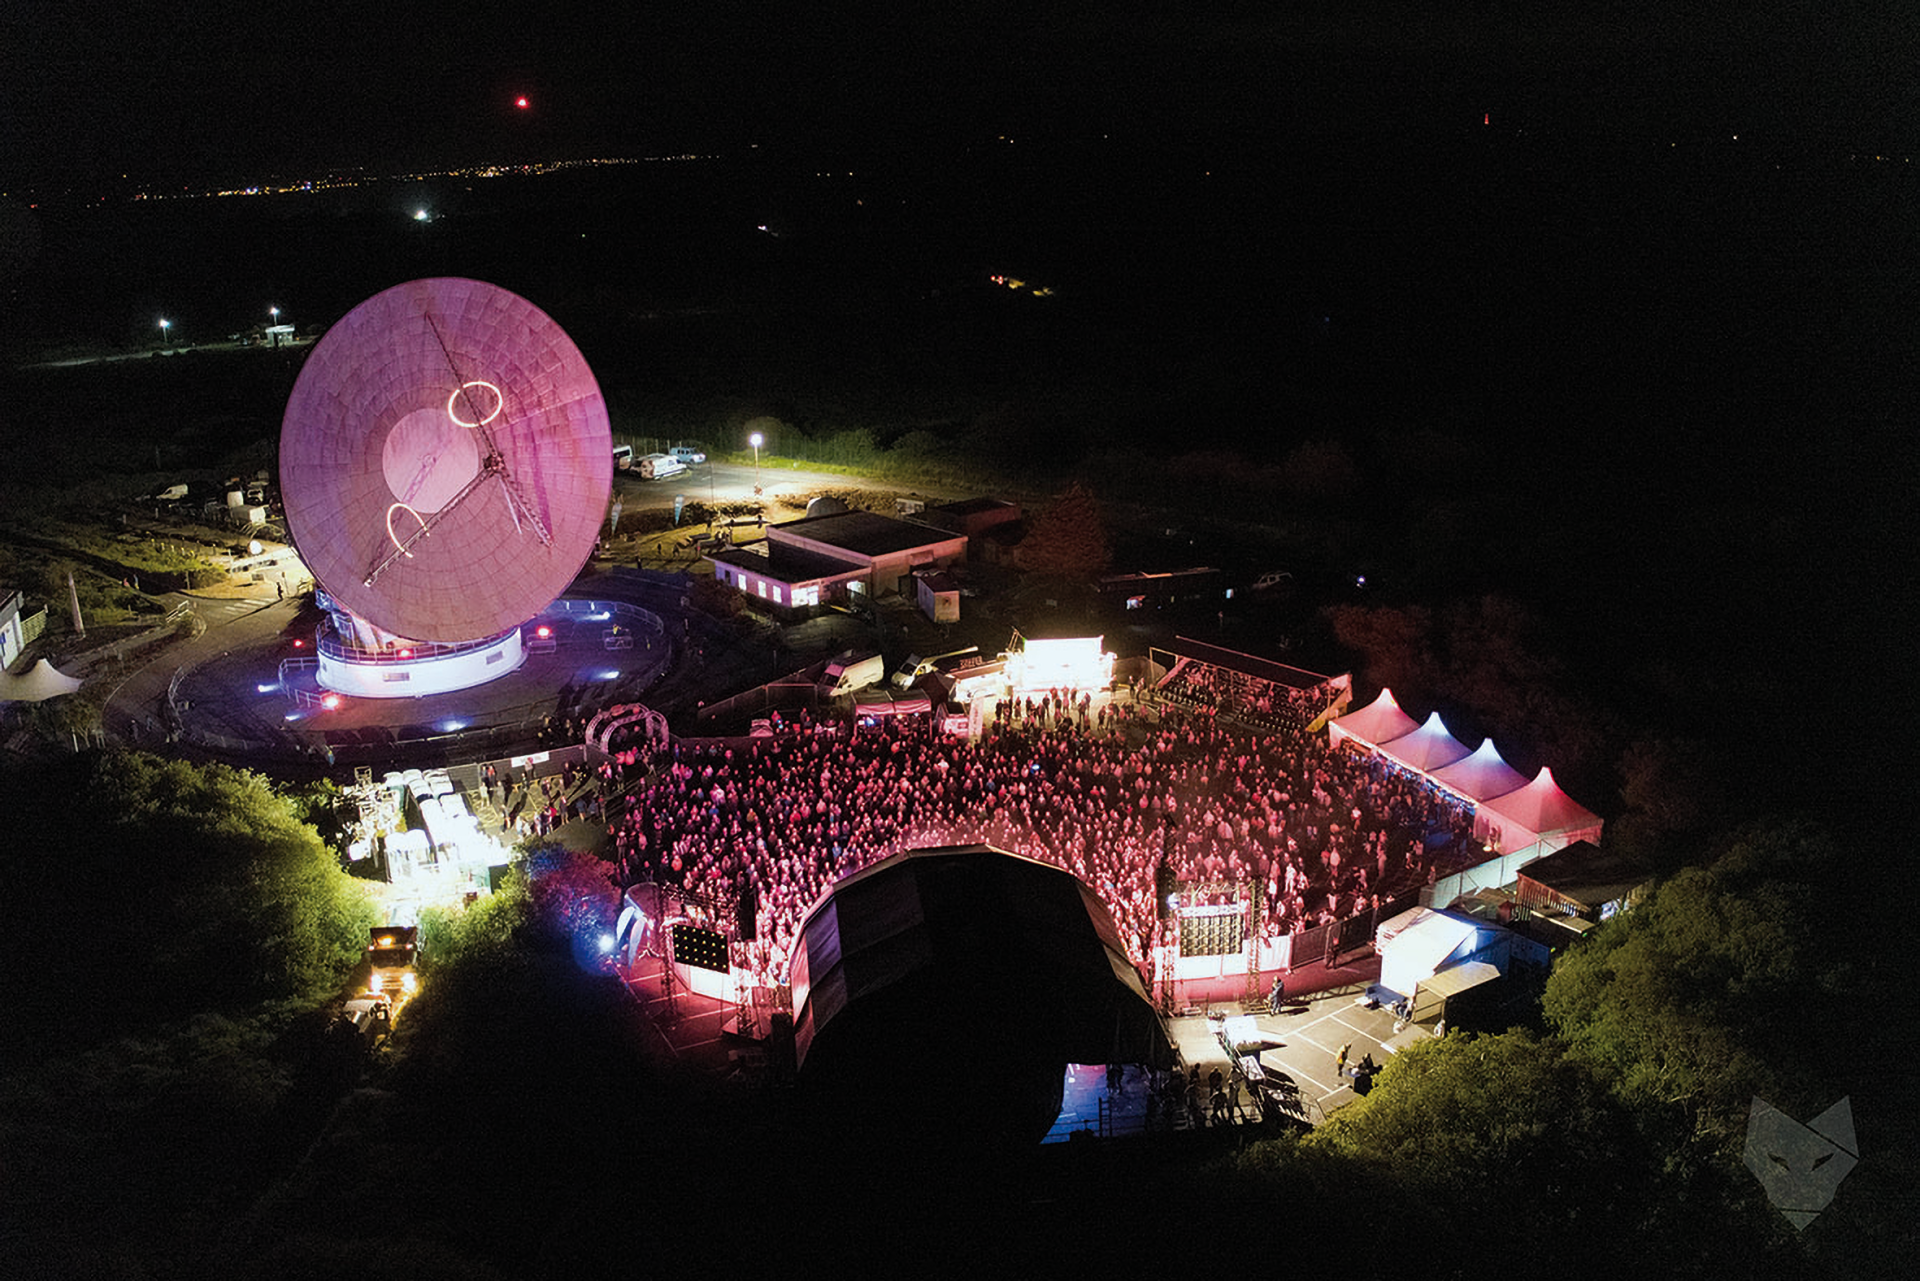 Aerial view at night 'Apollo 50' Festival